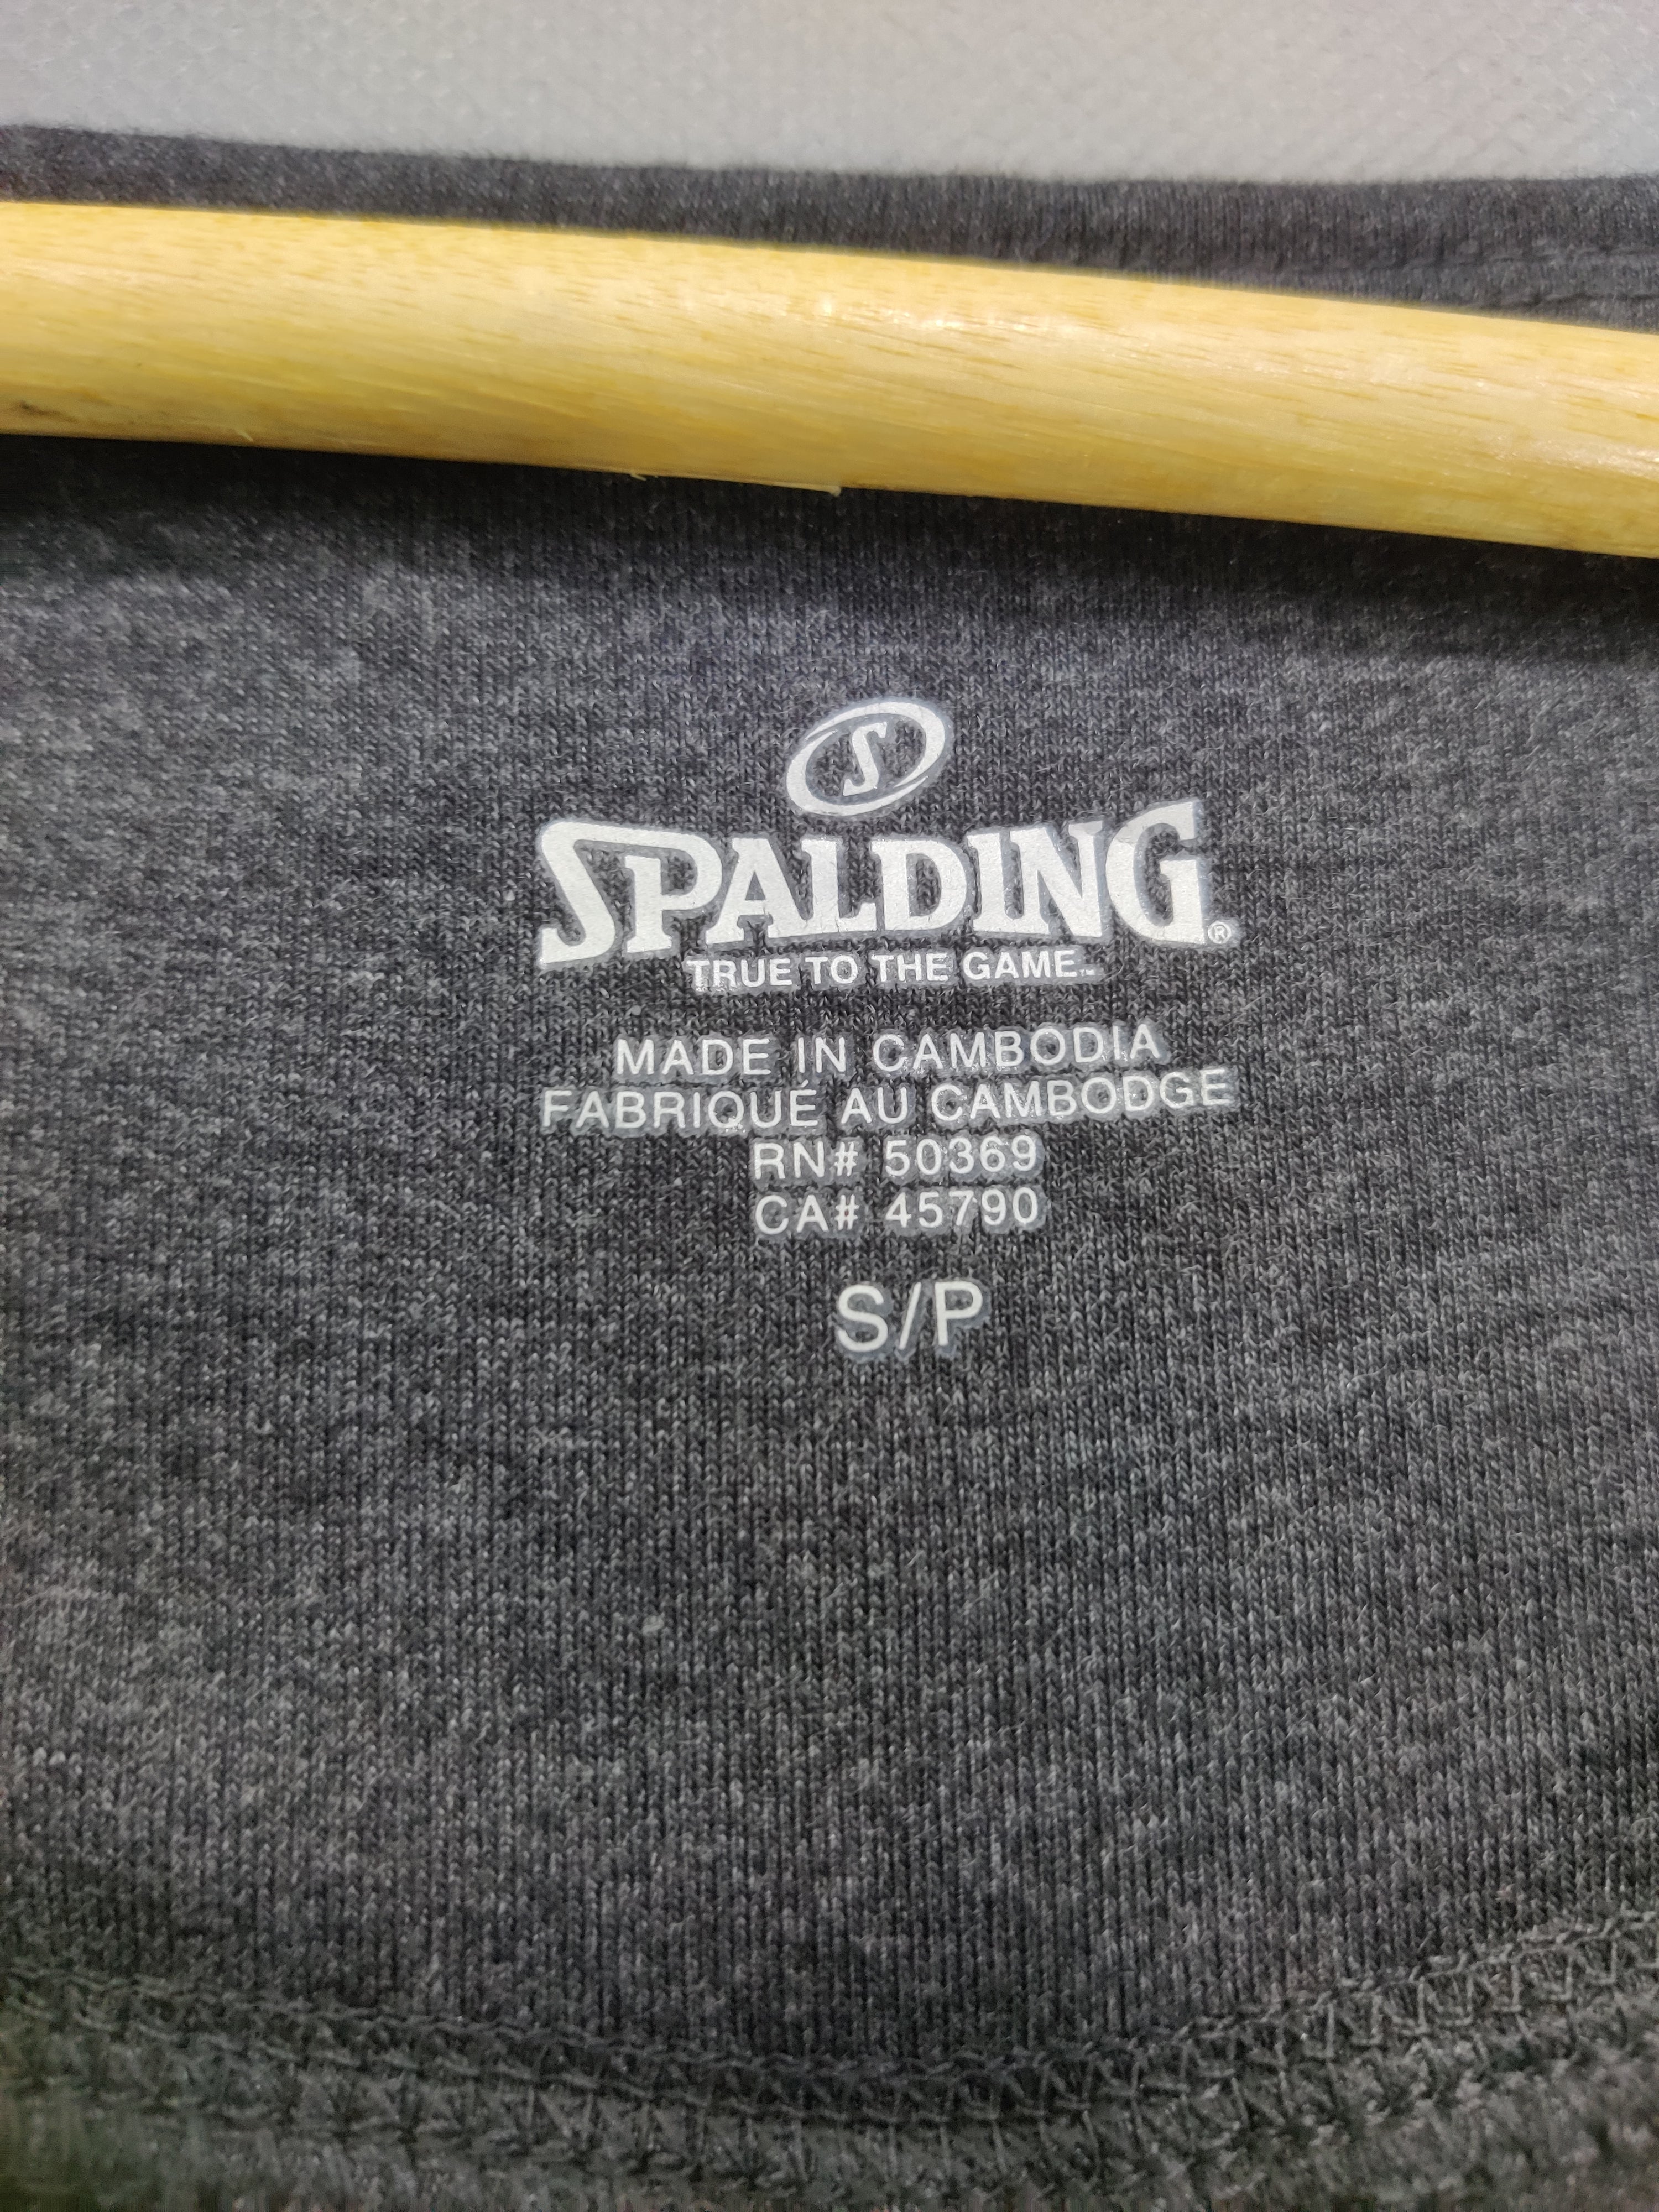 Spalding Branded Original Sports Stretch Gym tights For Women